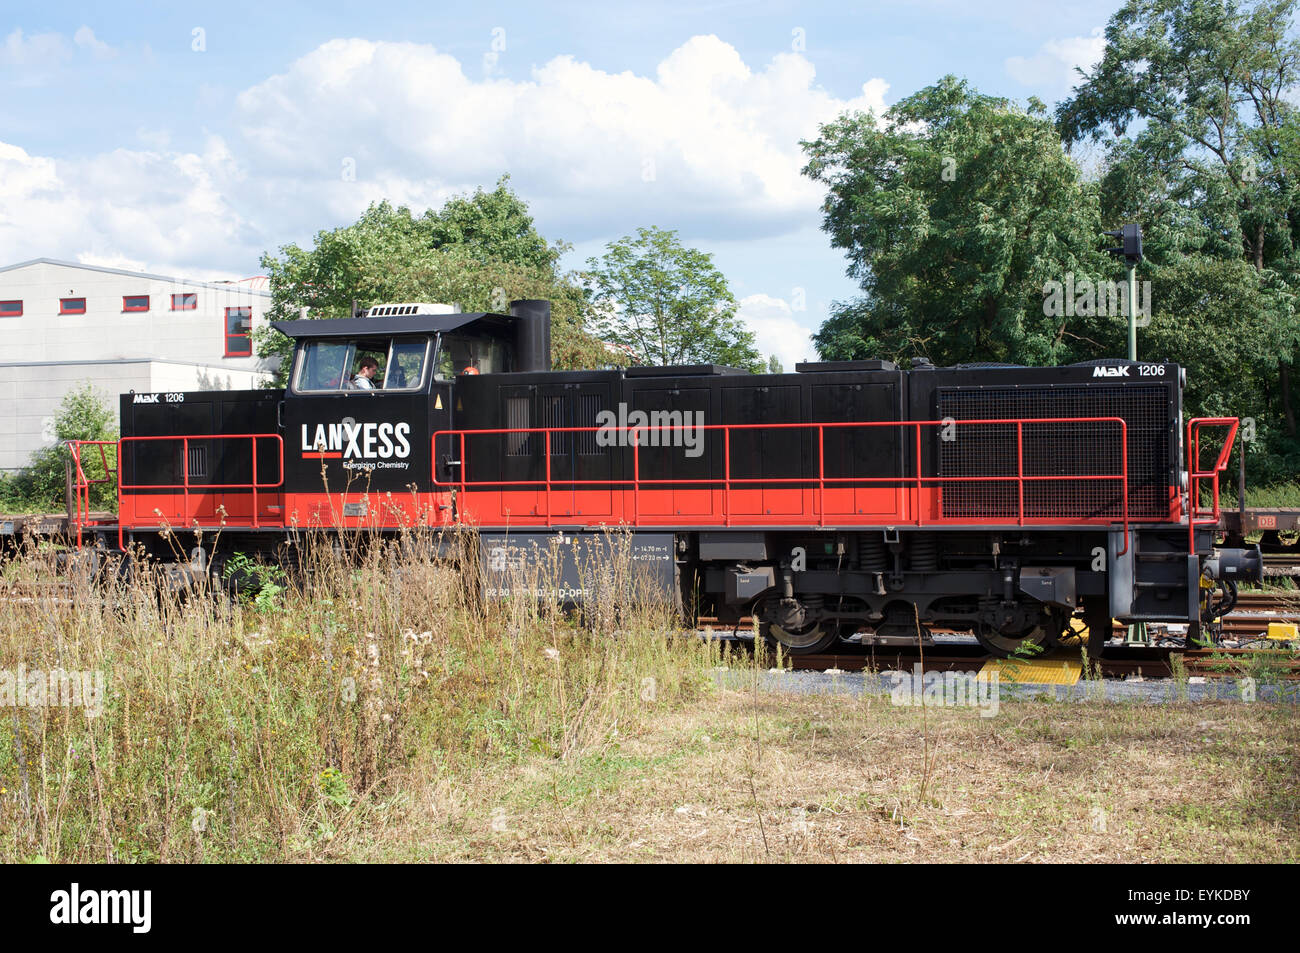 Mak 1206 locomotiva diesel in attesa al segnale luce rossa, Duisburg, Renania settentrionale-Vestfalia (Germania). Foto Stock